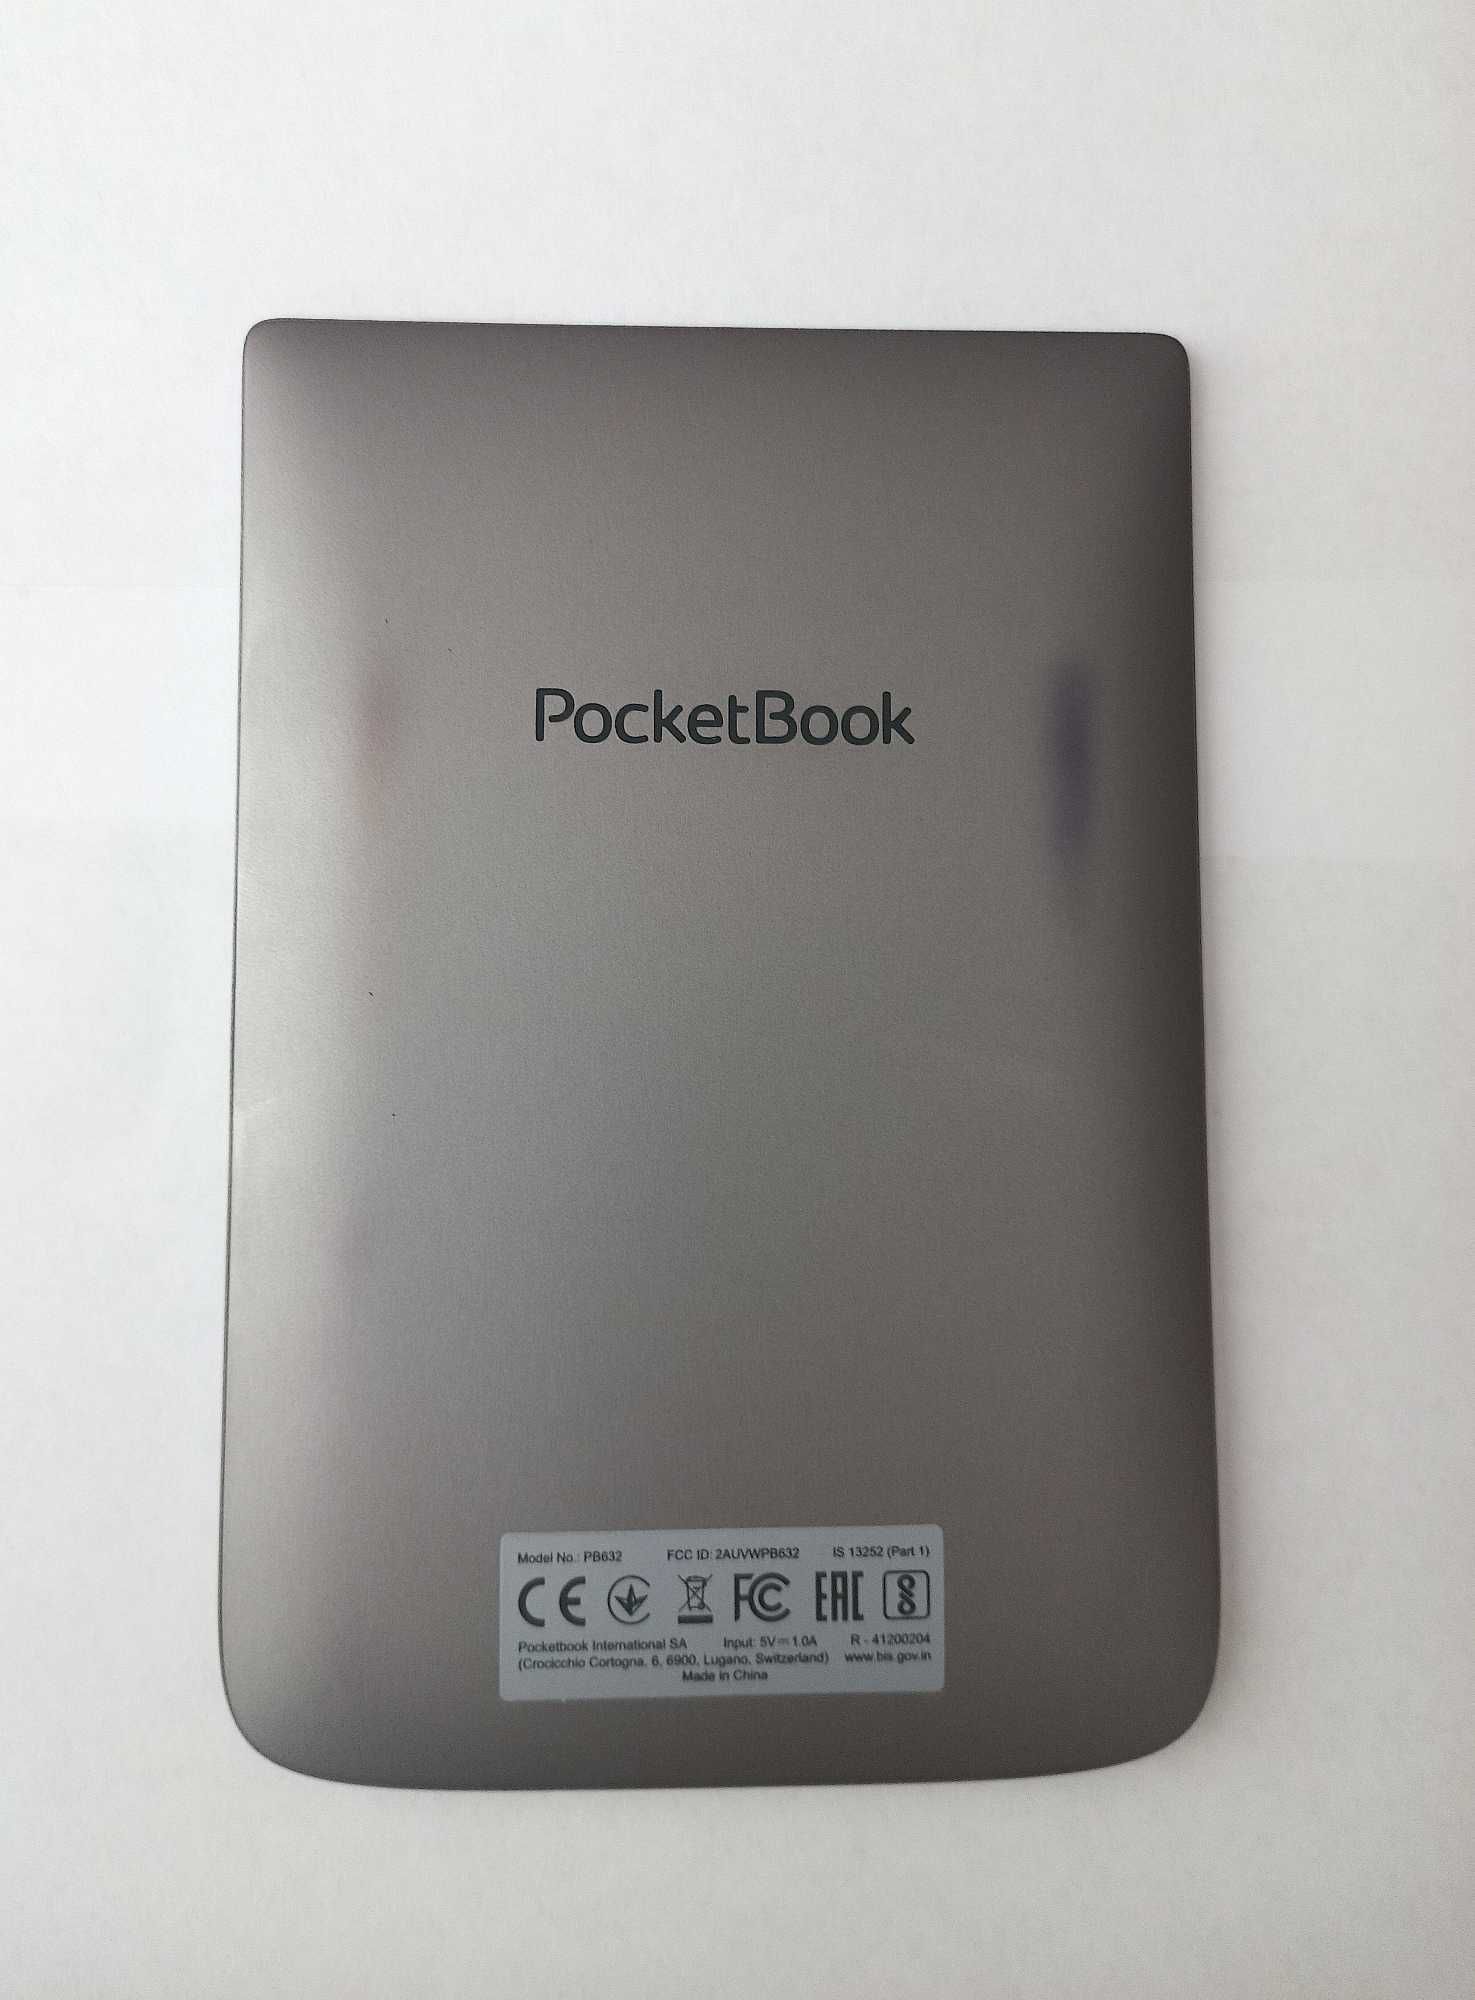 Czytnik ebook POCKETBOOK Touch HD 3